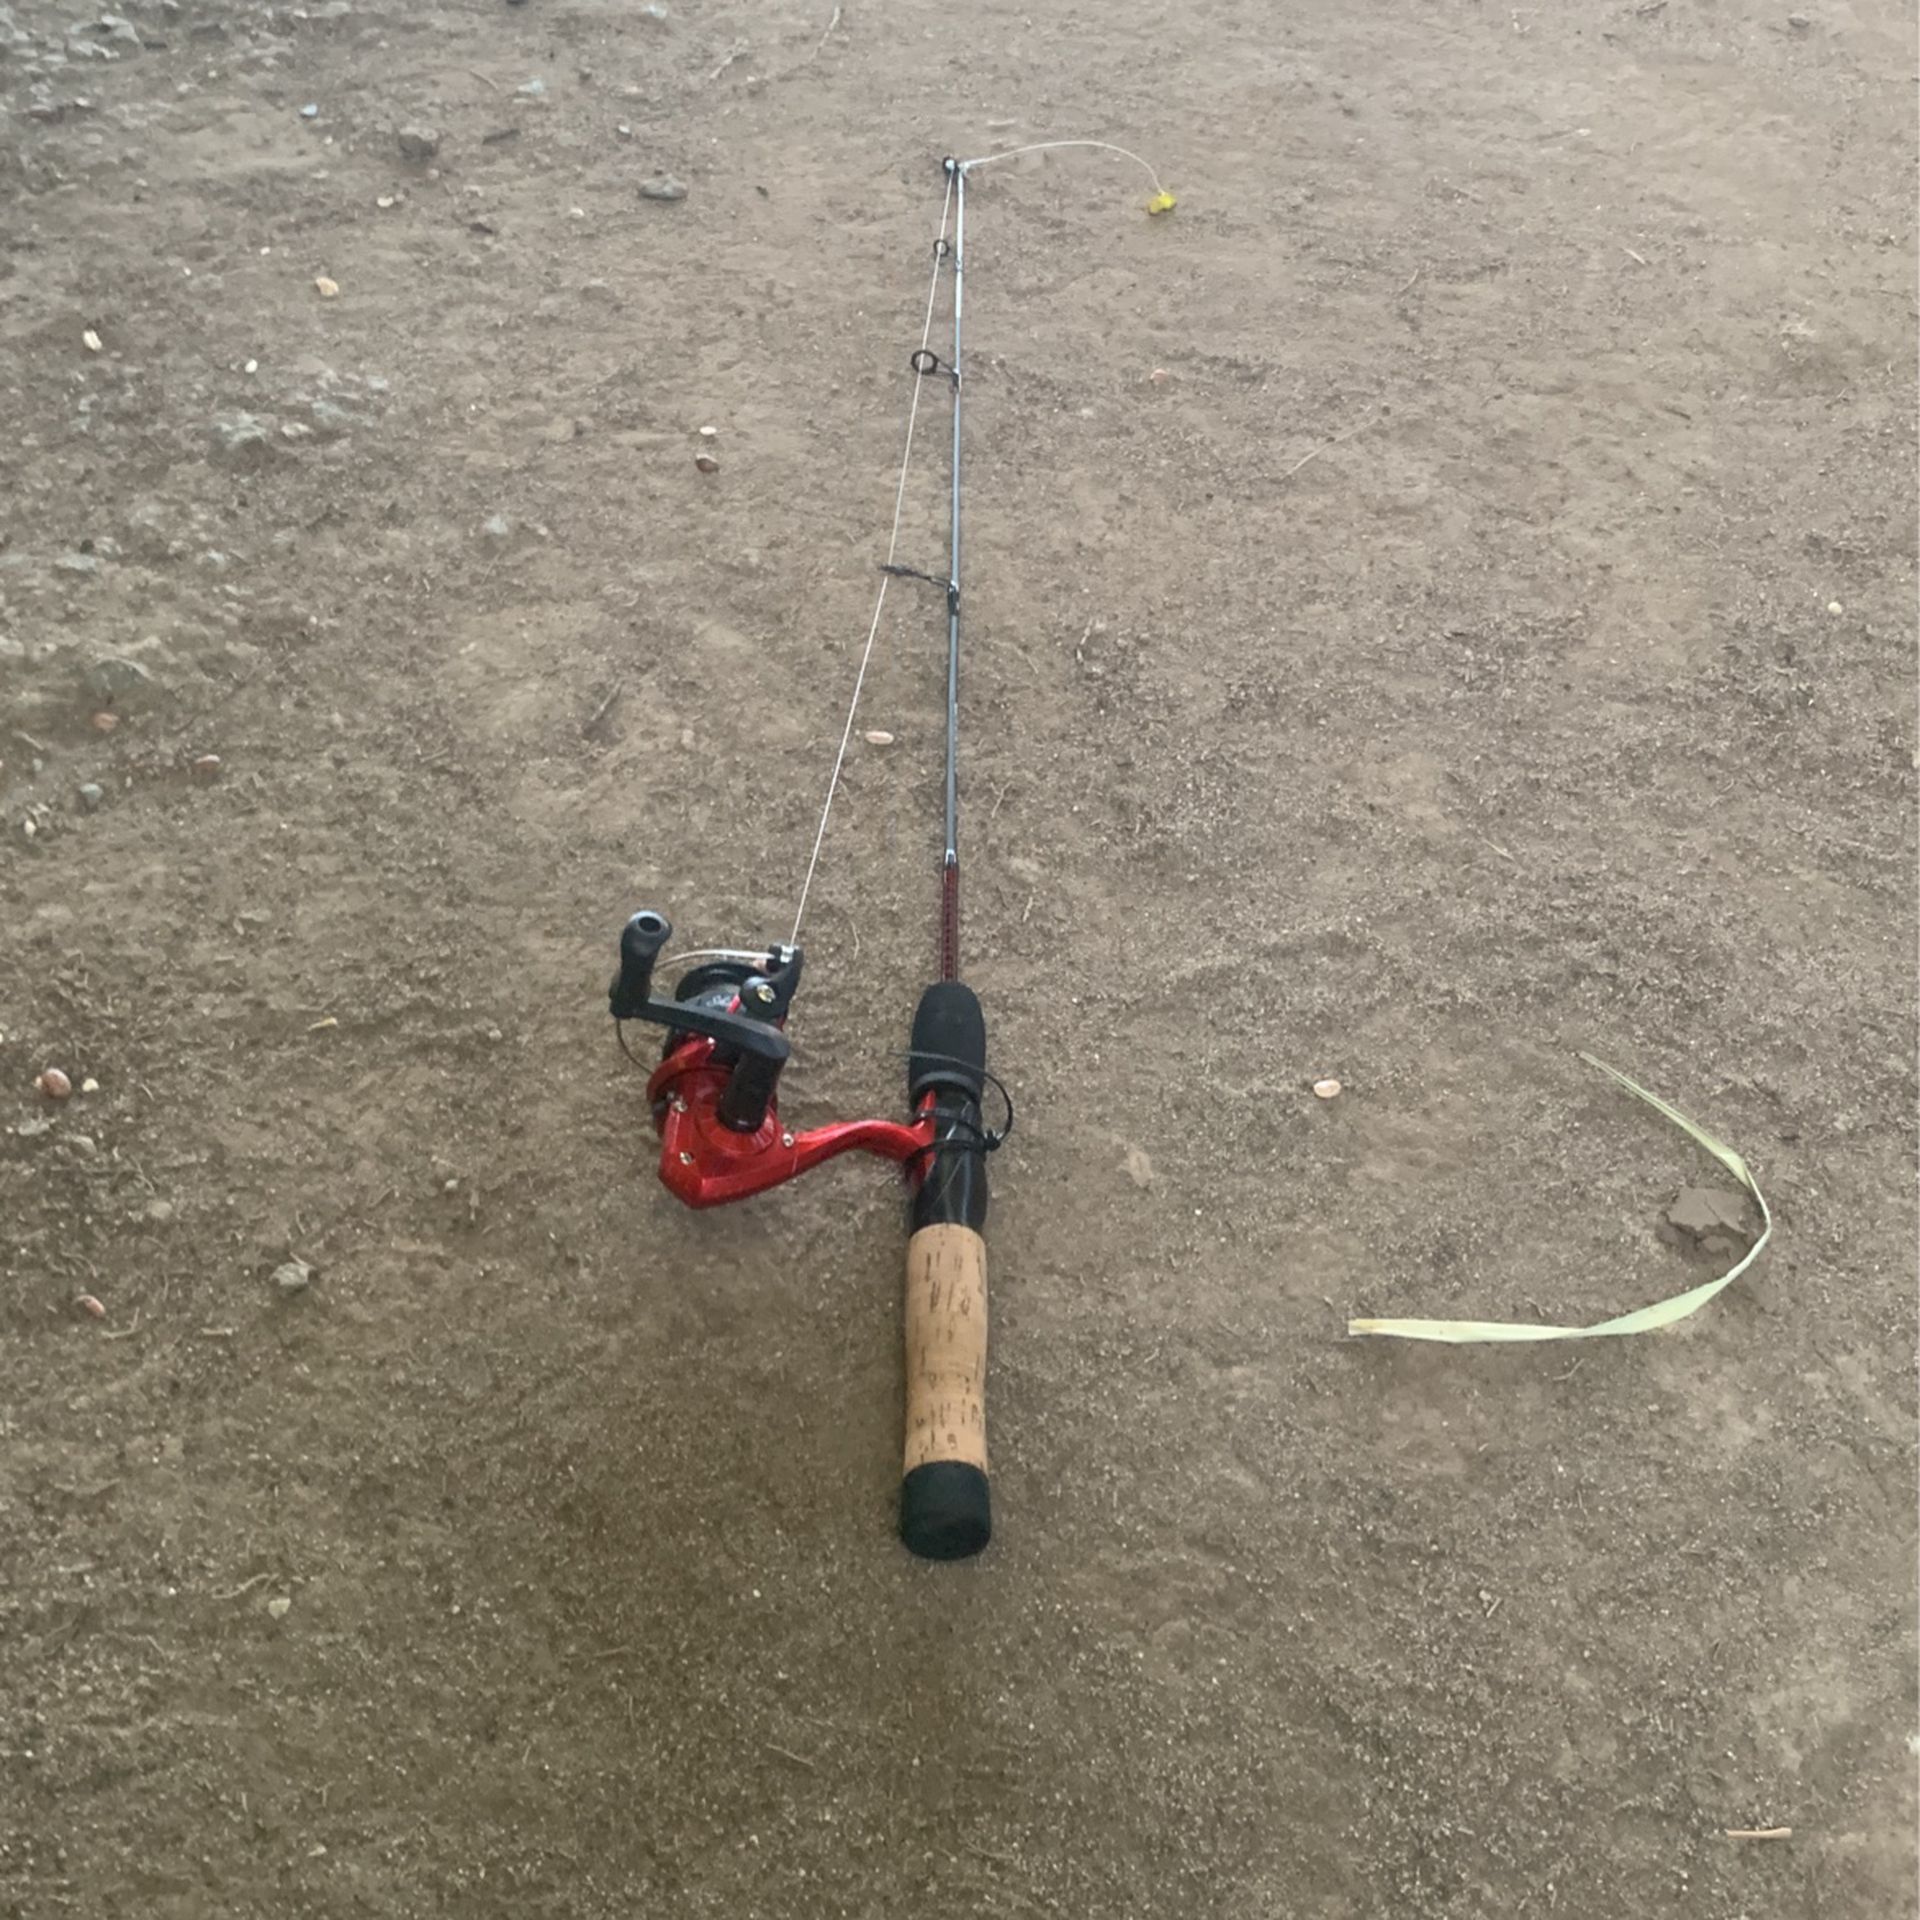 Mini Fishing Rod 